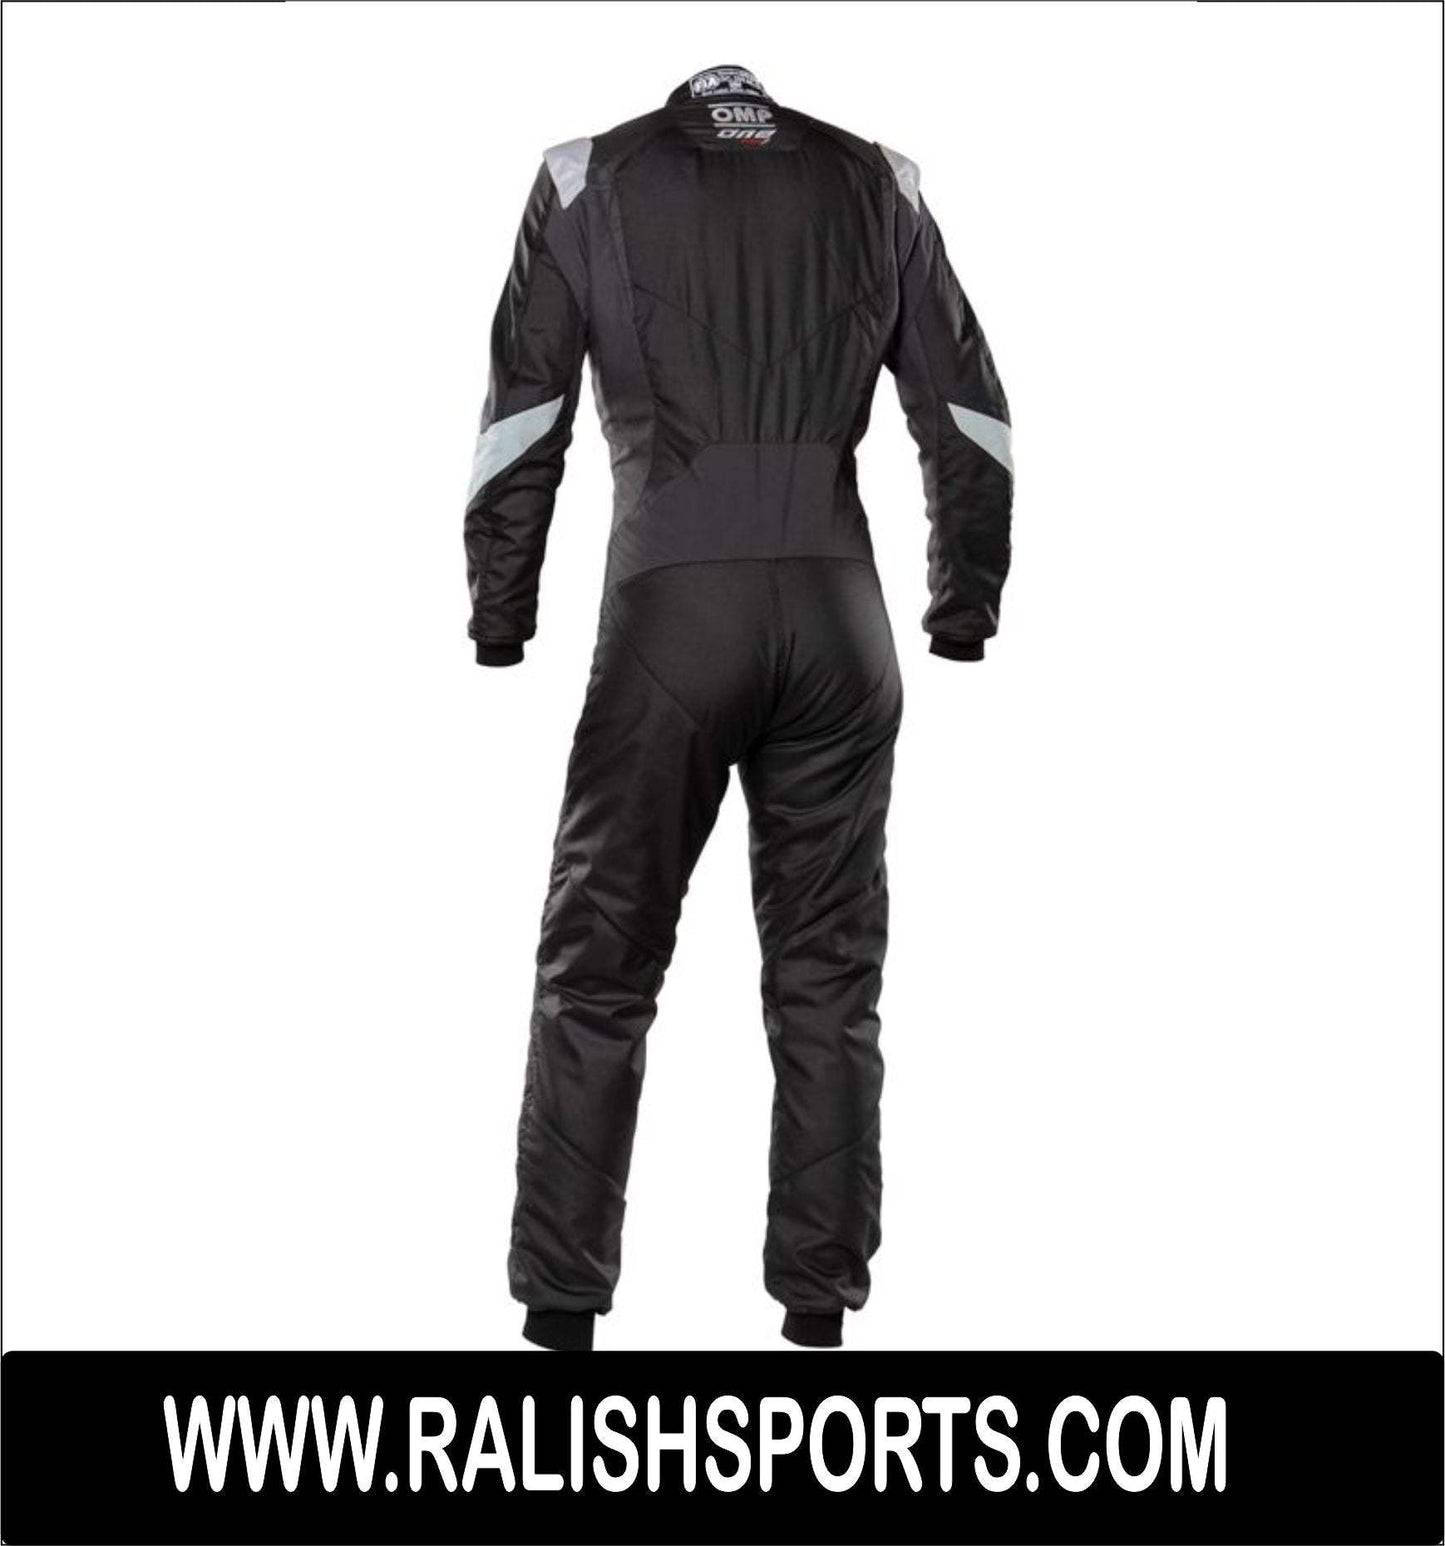 OMP One Evo X Race Suit custom - Ralish Sports